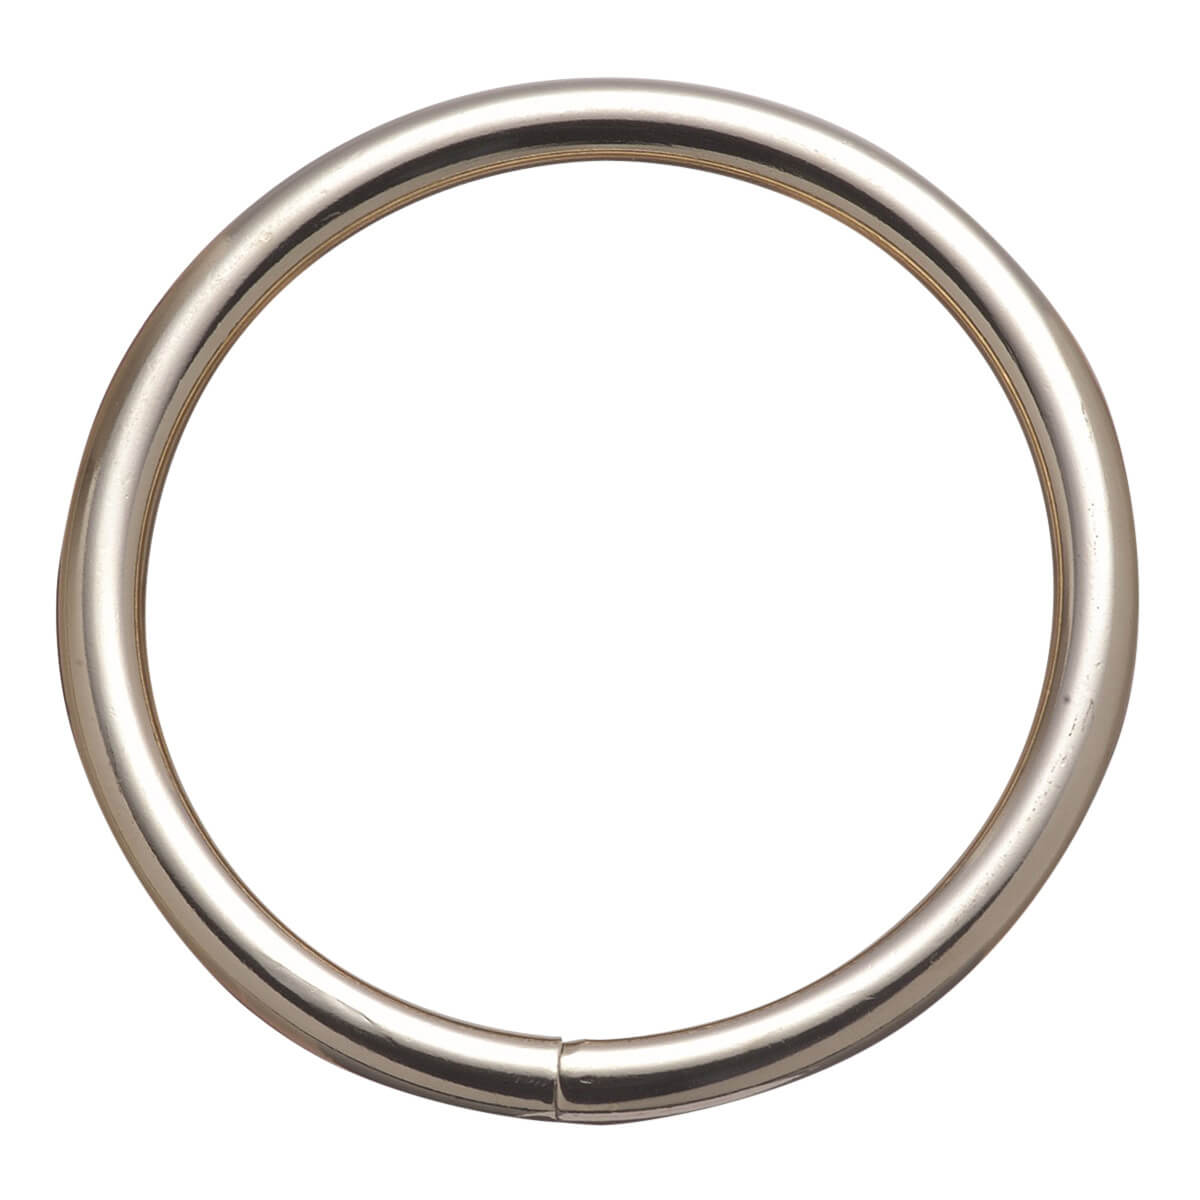 Harness Rings Welded - 1-1/4-in Nickel Plated